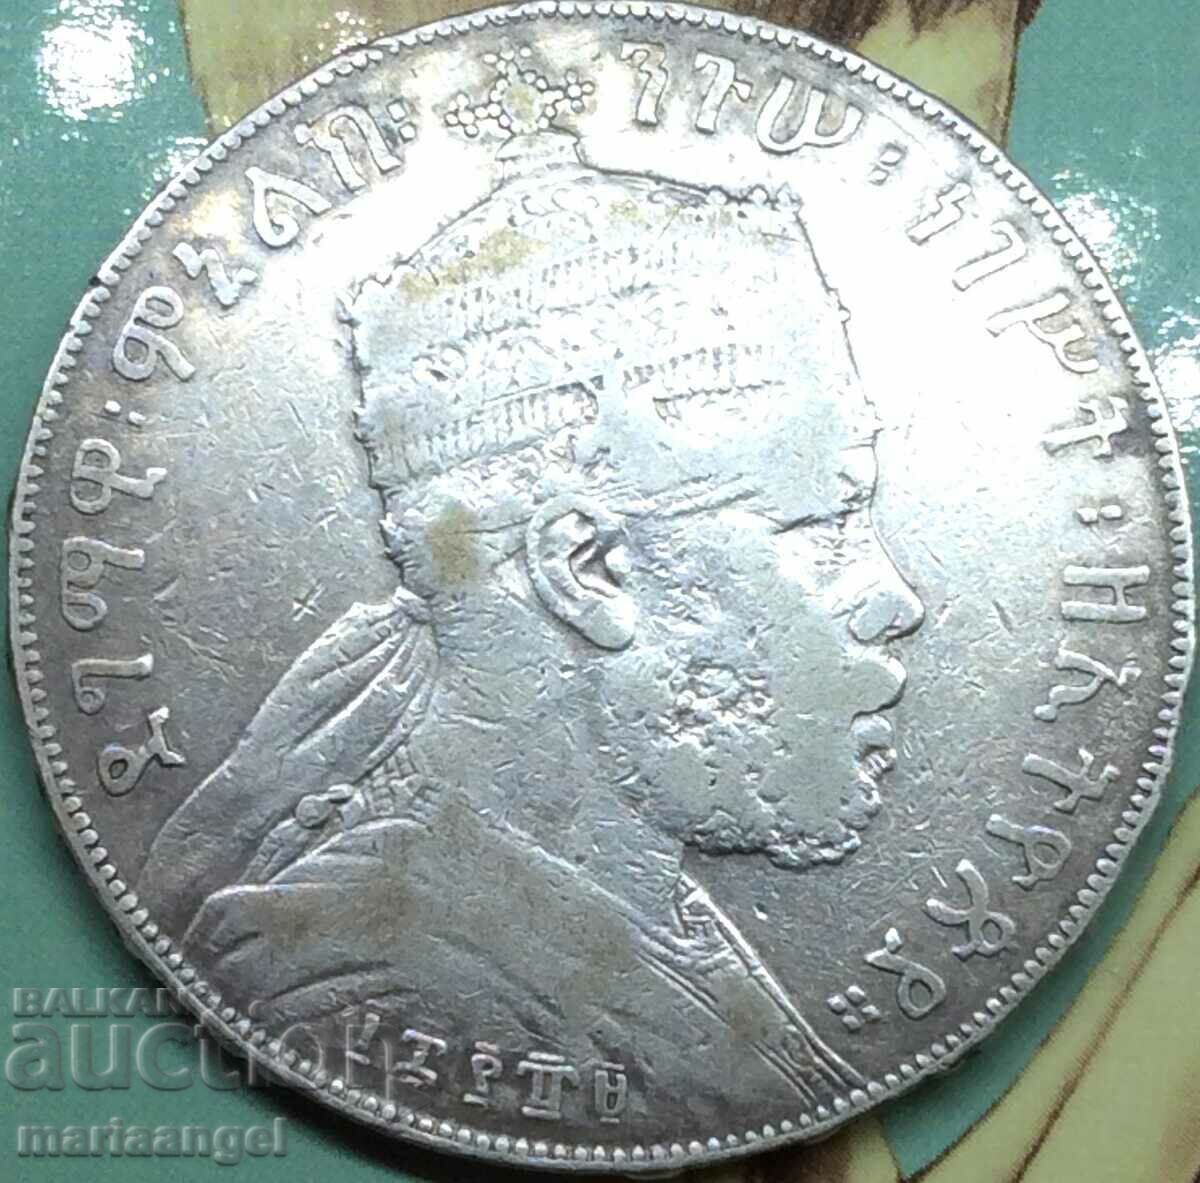 Ethiopia 1 birr 1897 Menelik II mint A - Paris 27.76g silver